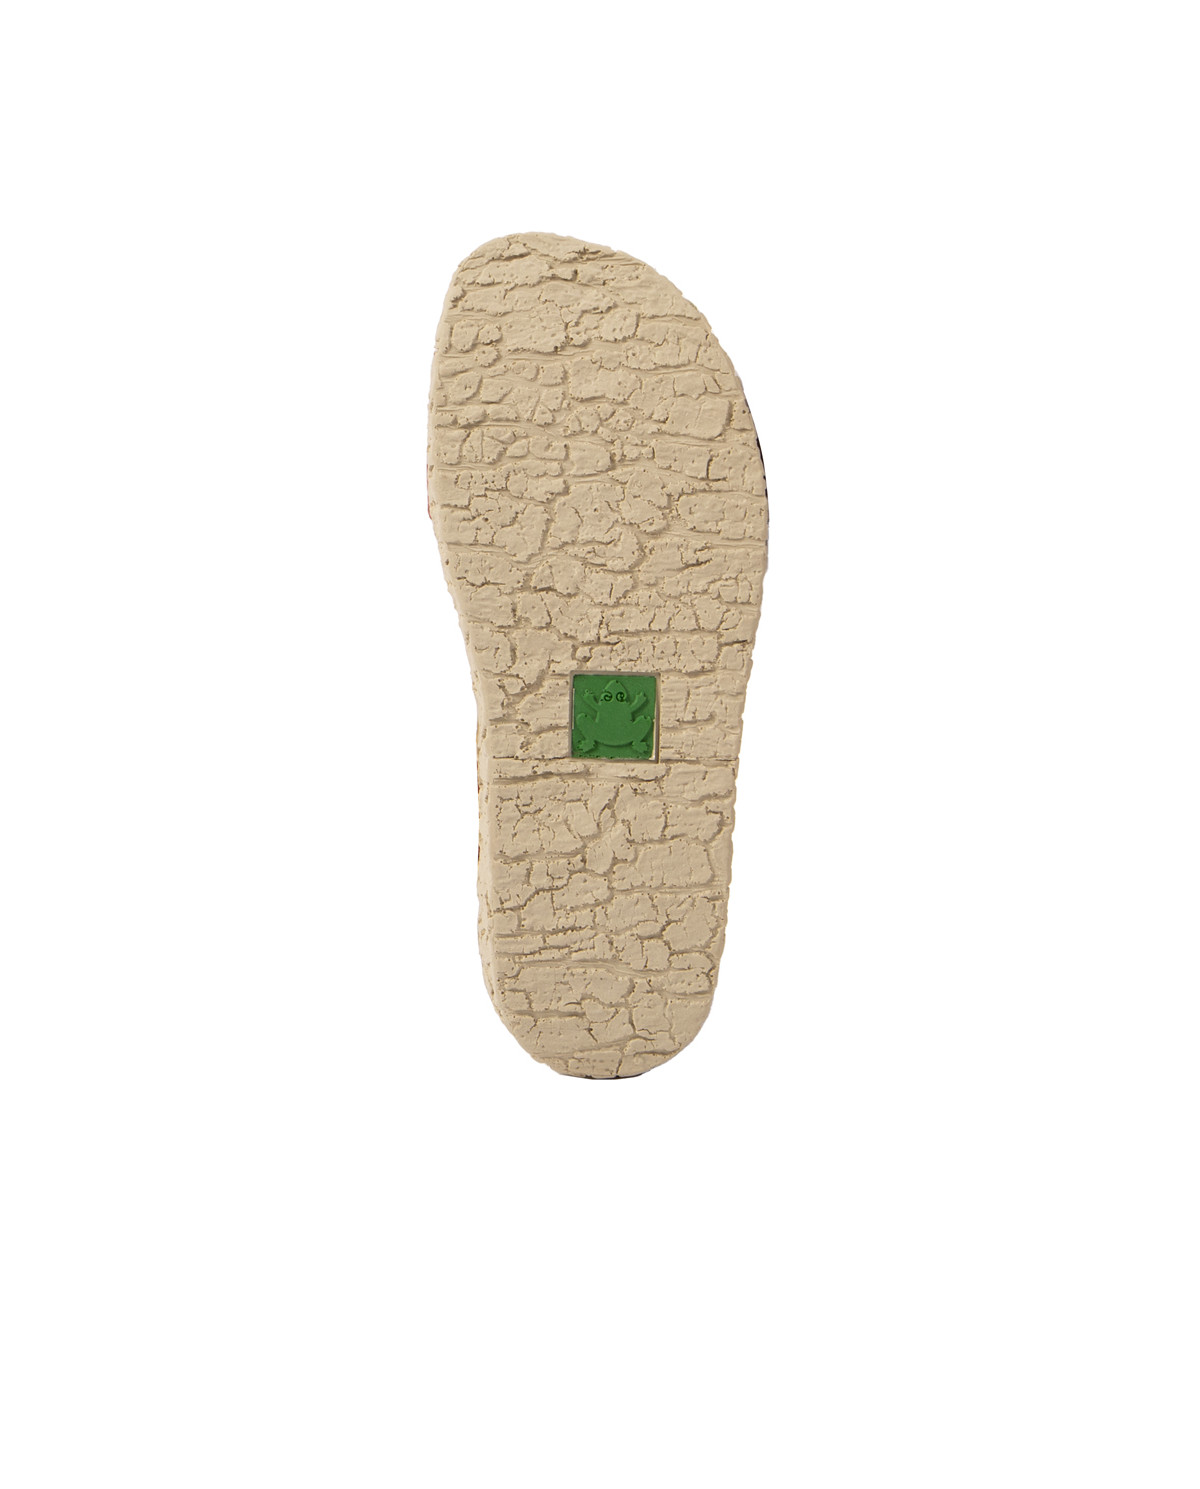 Sandales confortables à plateforme en cuir - Rose - El naturalista